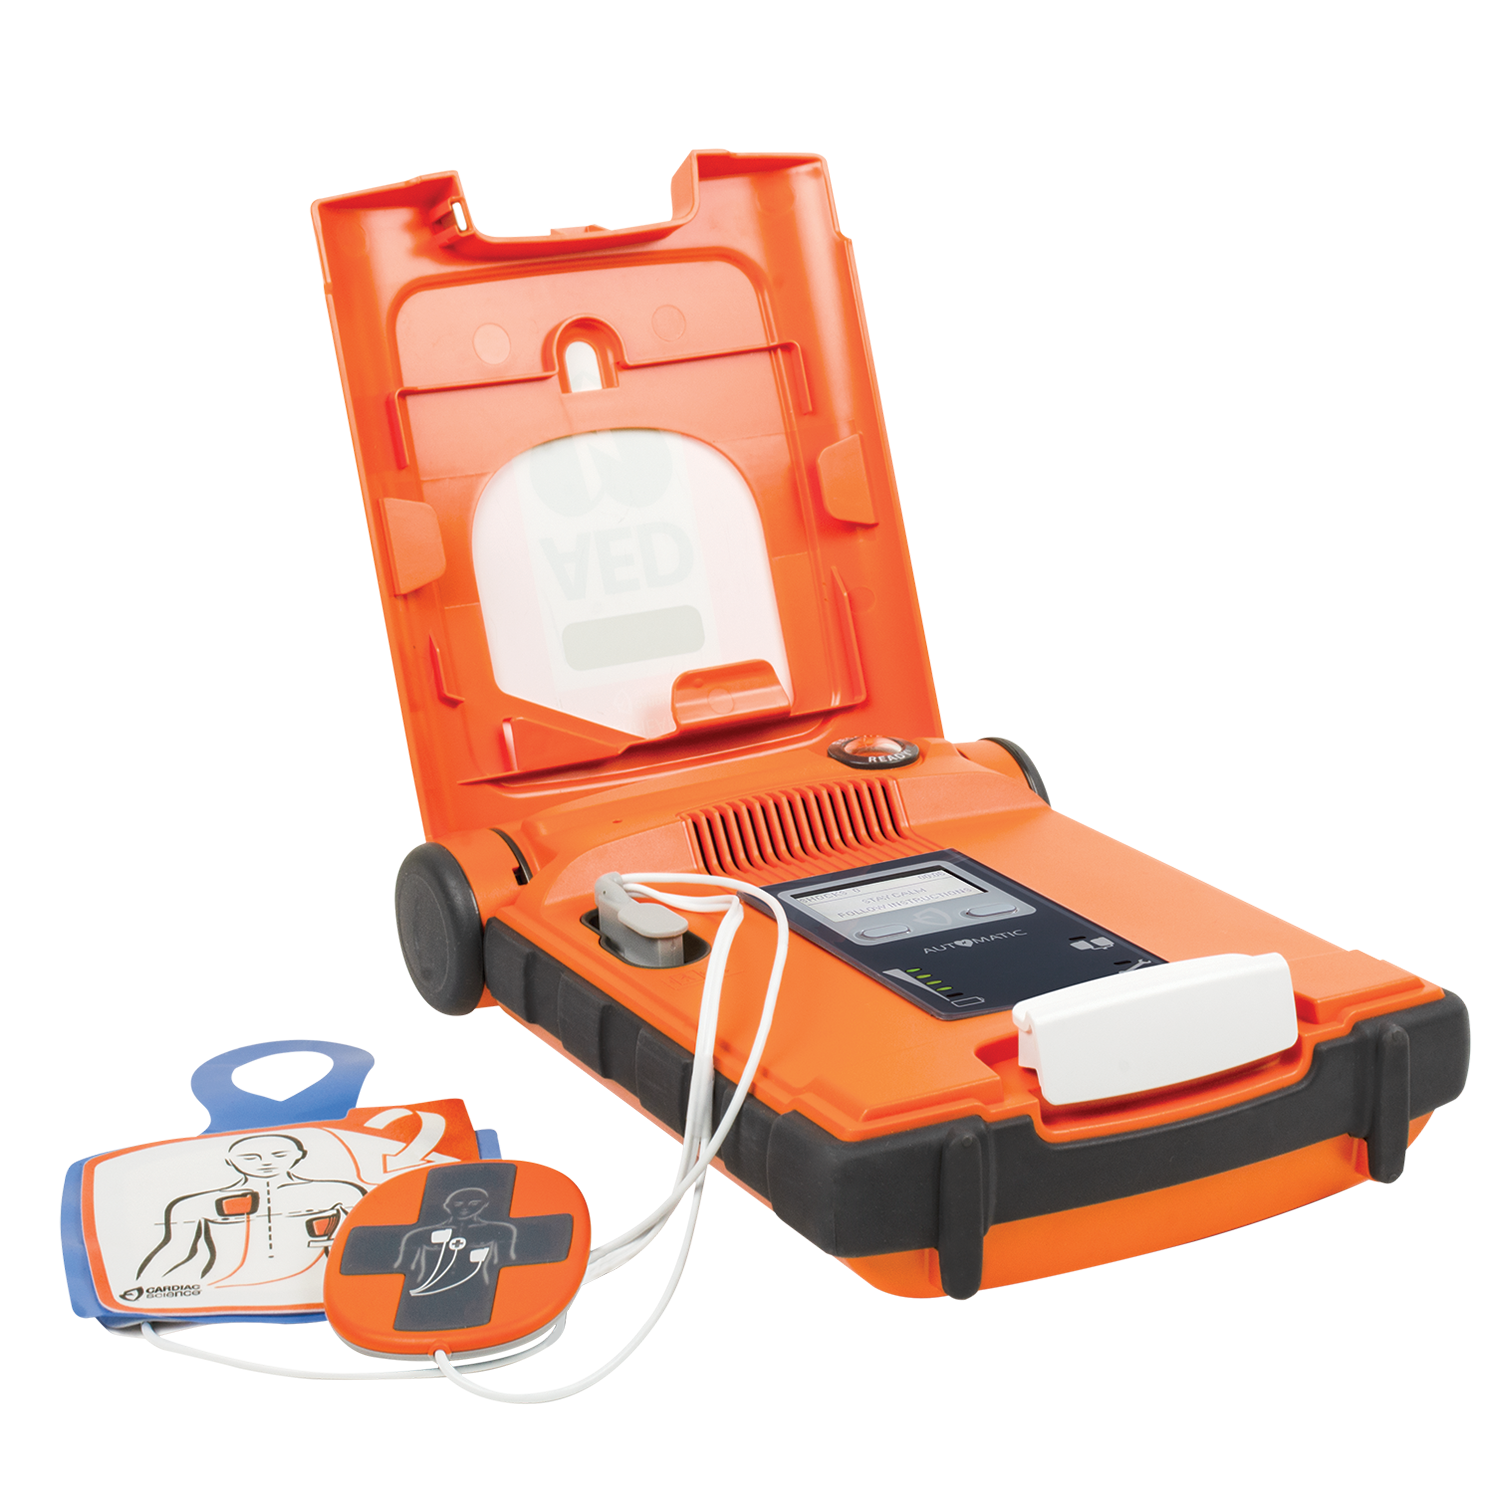 Desfibrilador automático (DEA o AED) “Powerheart G5”